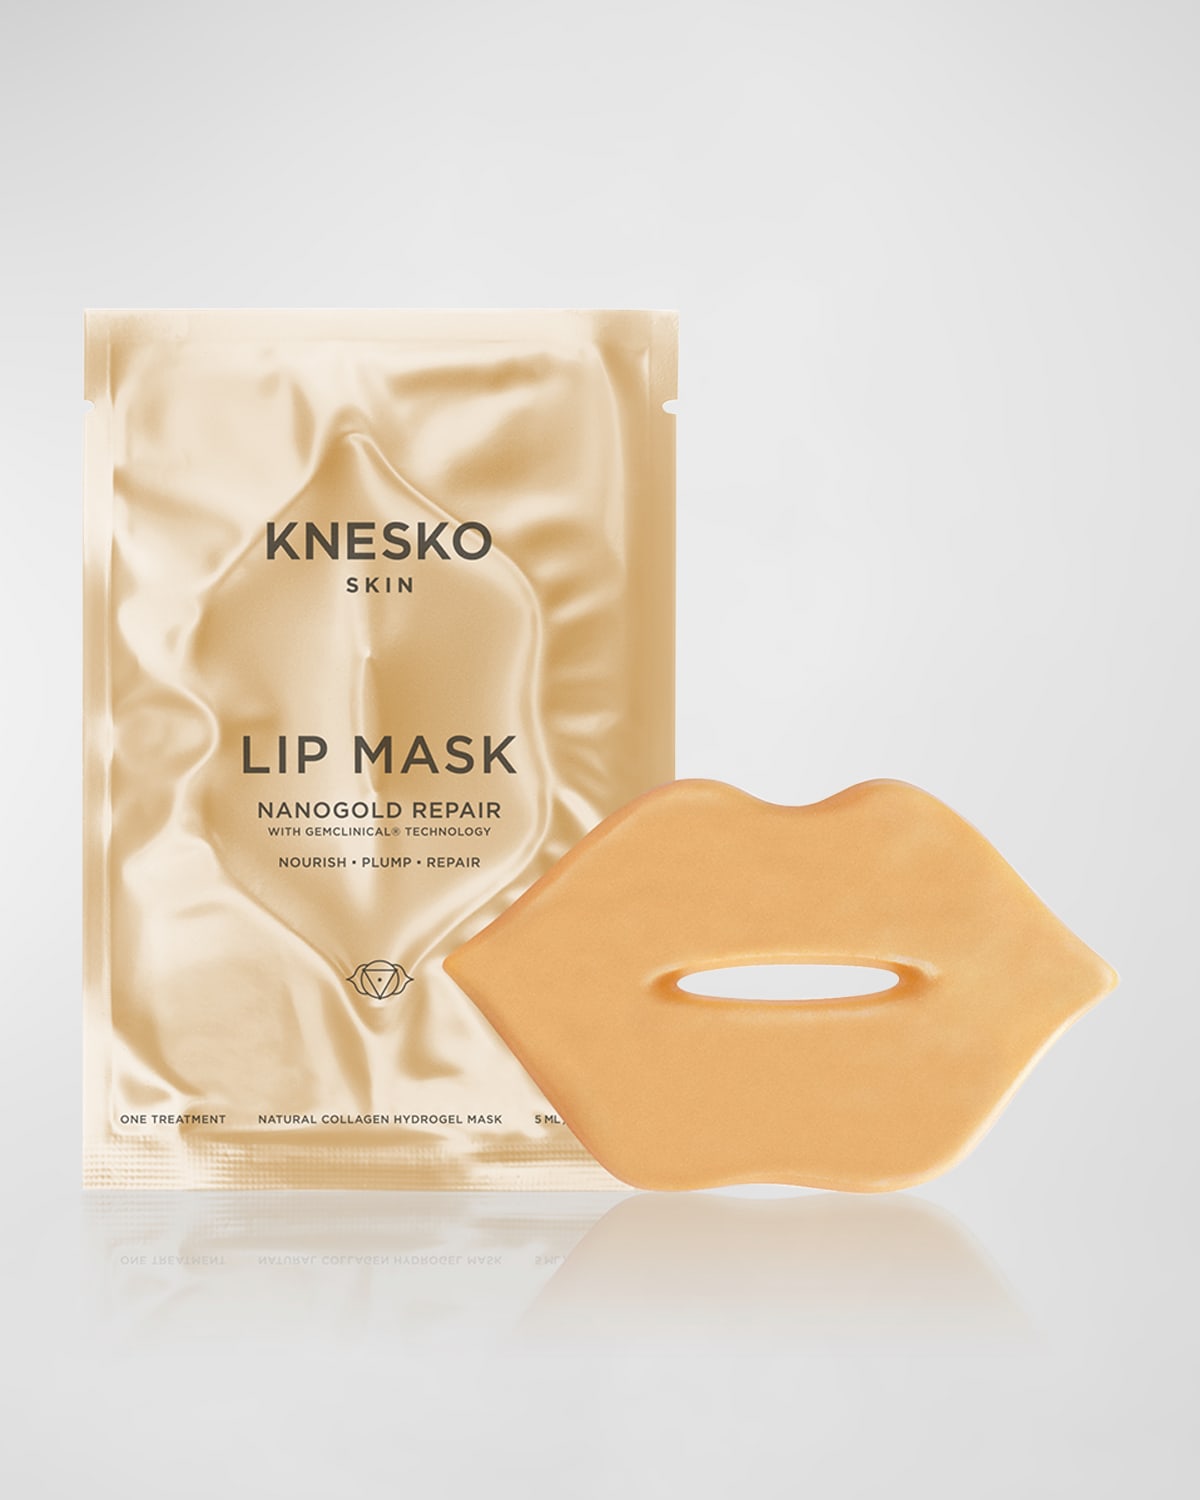 Knesko Skin Nanogold Repair Lip Mask (1 Treatment)